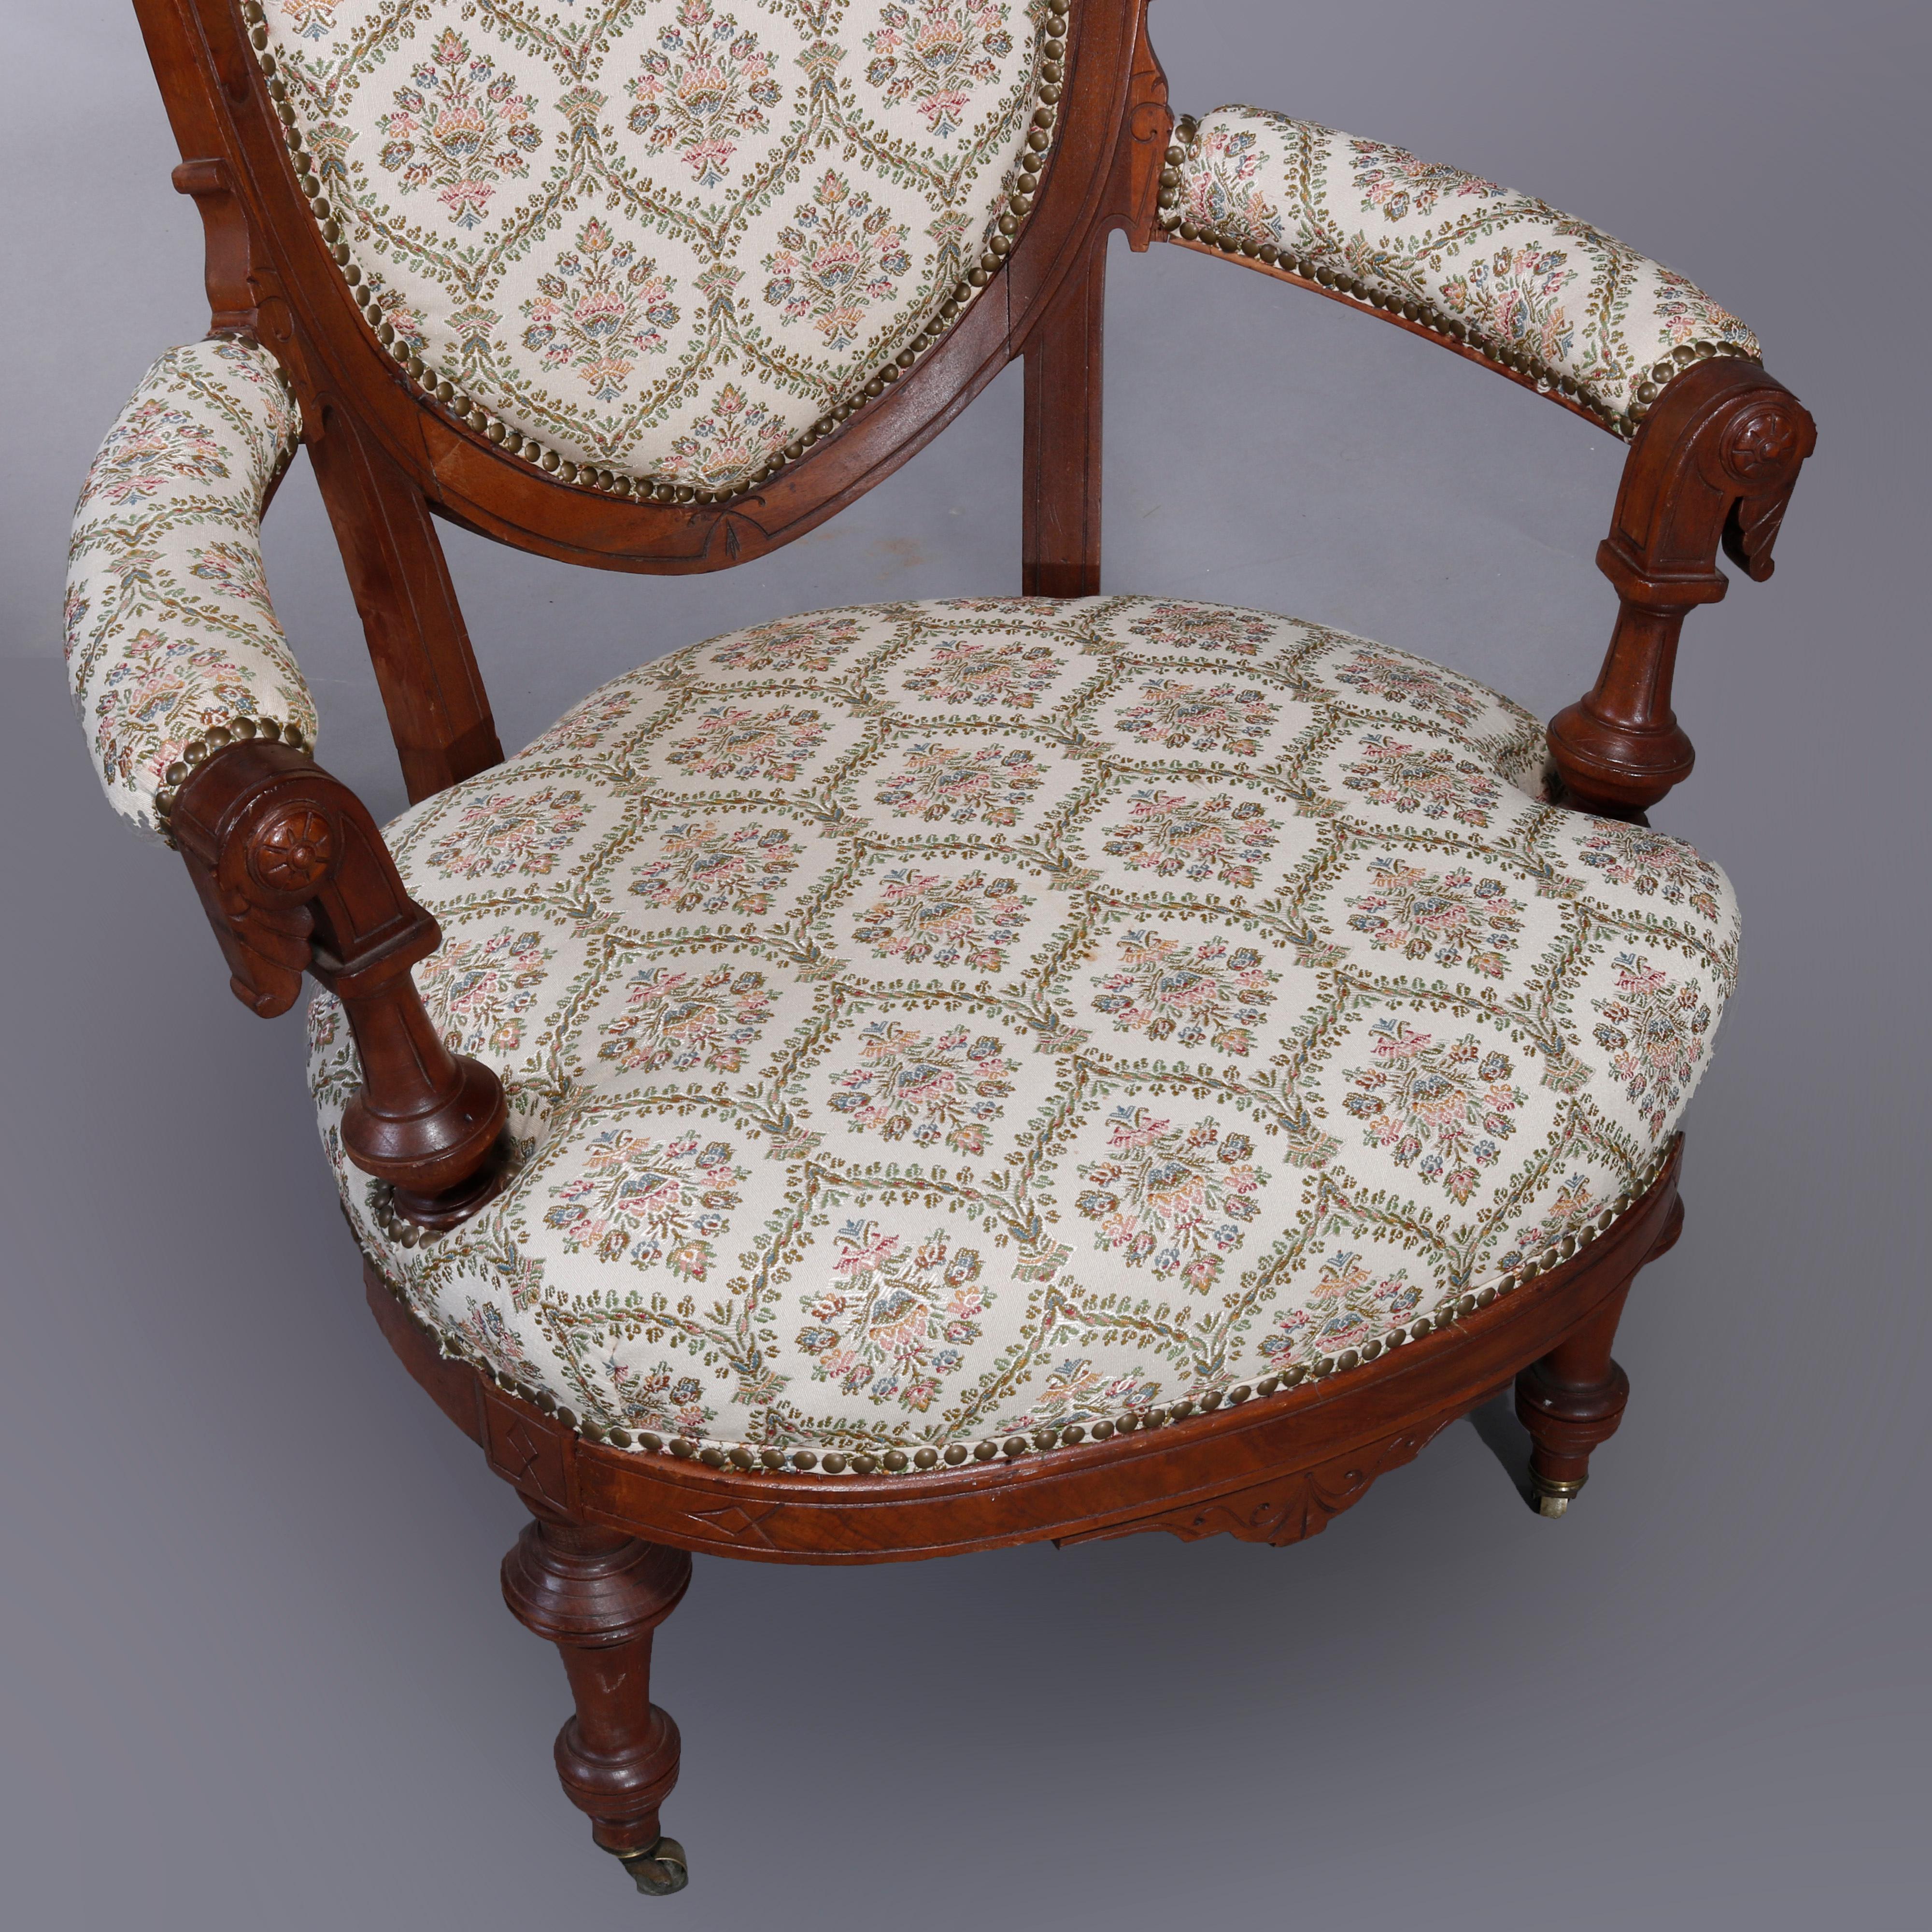 Antique Renaissance Revival Walnut & Burl Parlor Armchairs with Marquetry, c1880 For Sale 7